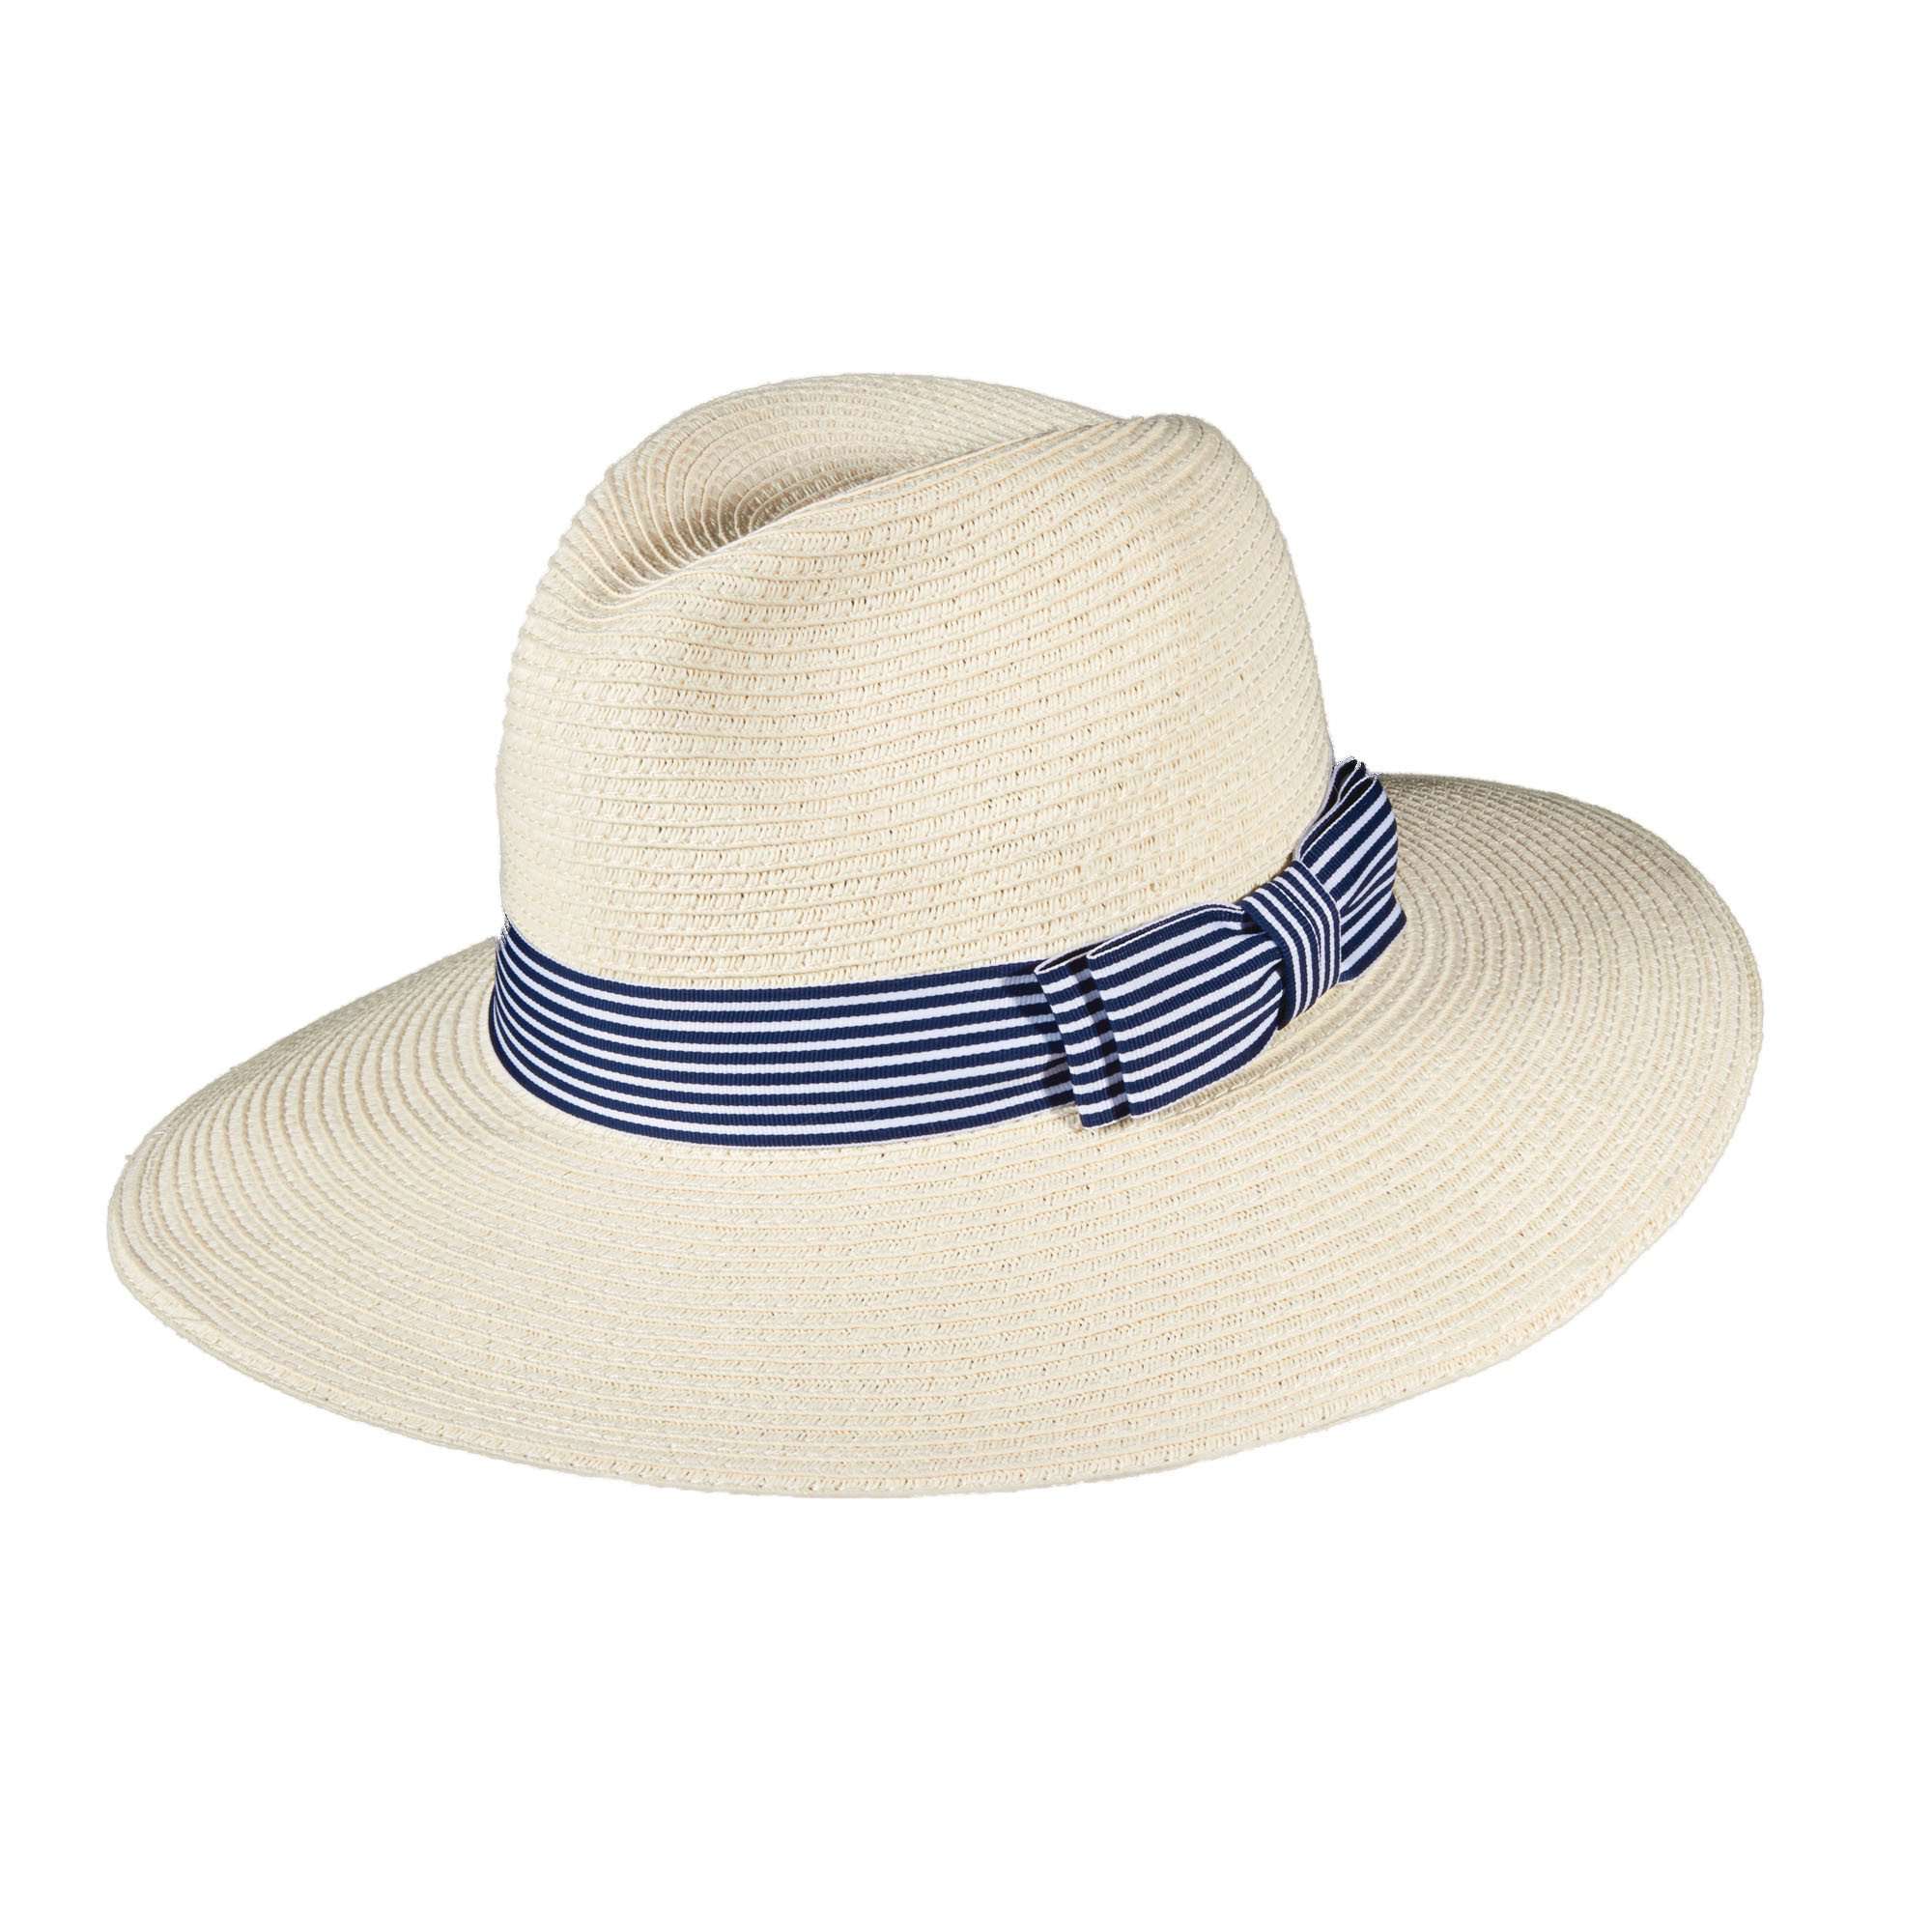 Callanan Safari Hat with Striped Band Safari Hat Callanan Hats cr253nt Natural Medium (57 cm) 